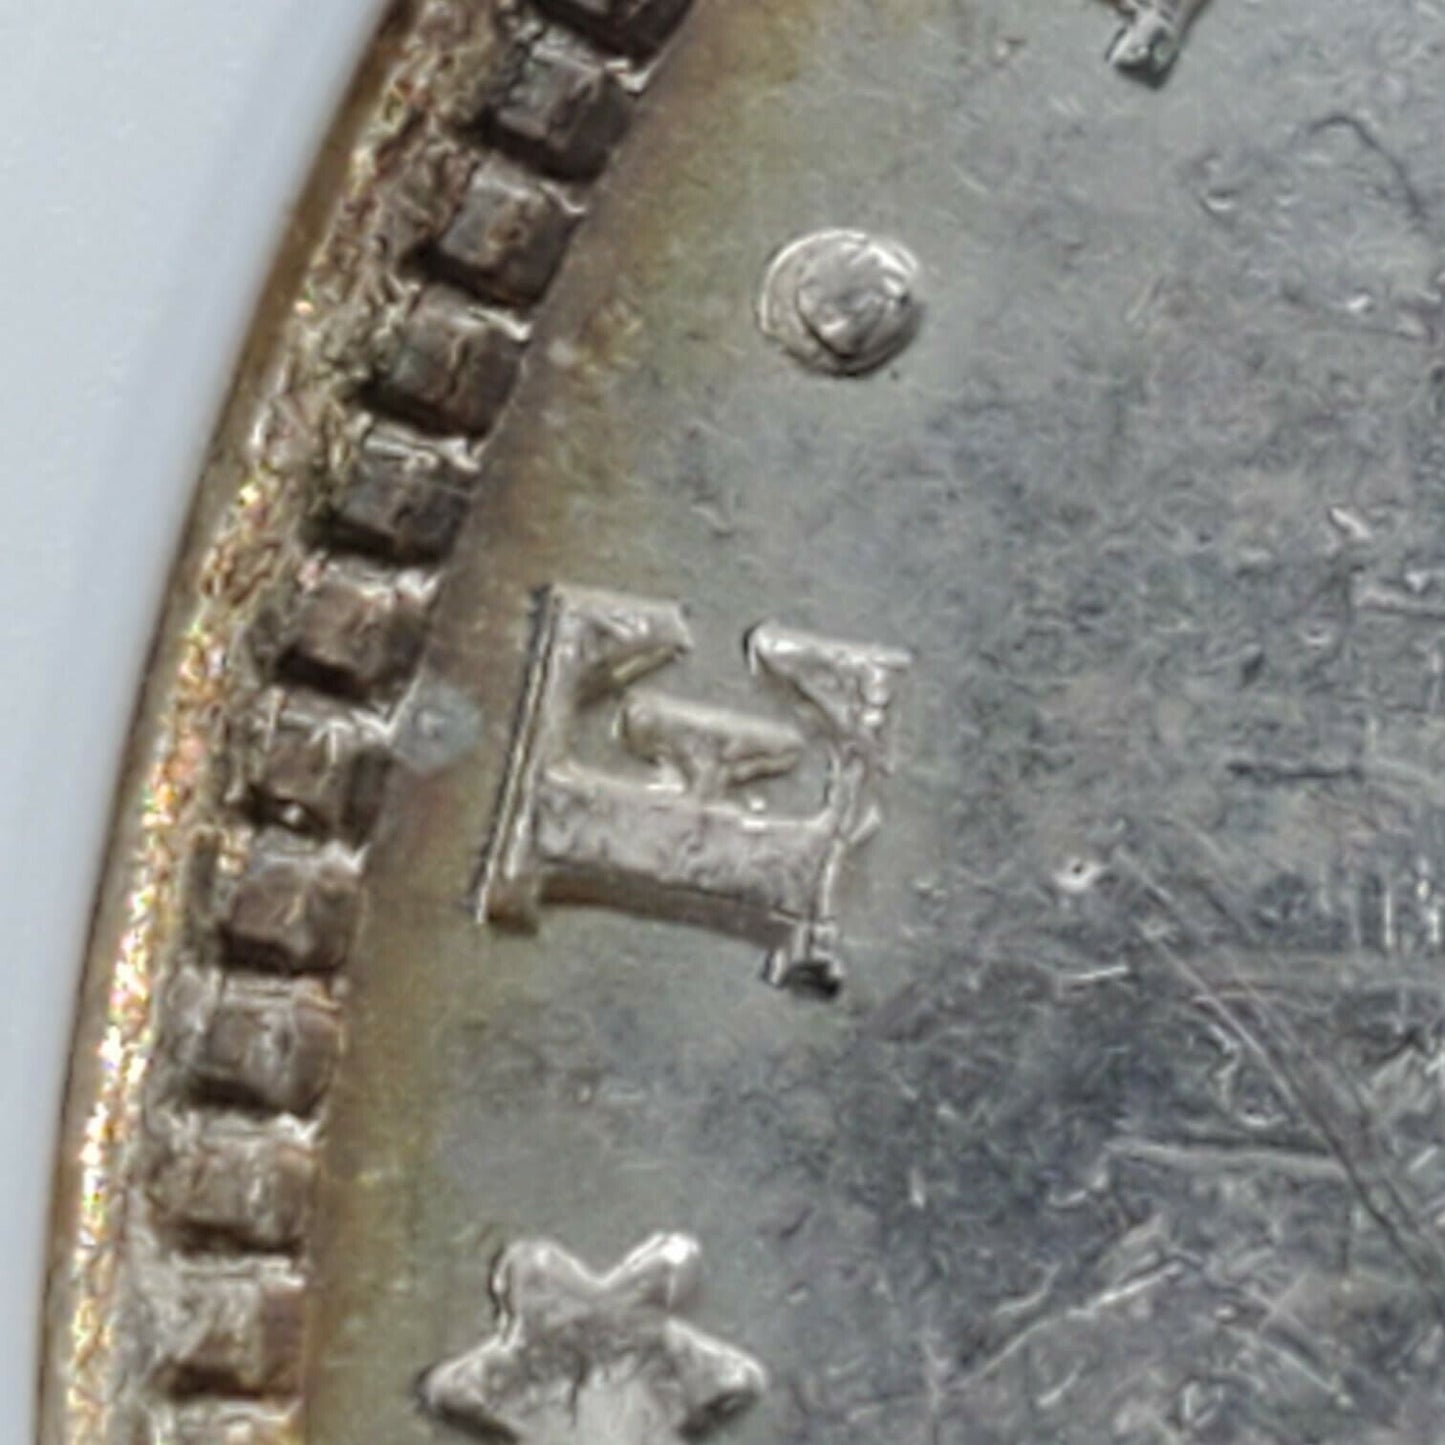 1878 P 8TF Morgan Silver Dollar Variety Coin ANACS MS60 PL PROOF LIKE VAM-2 Vam